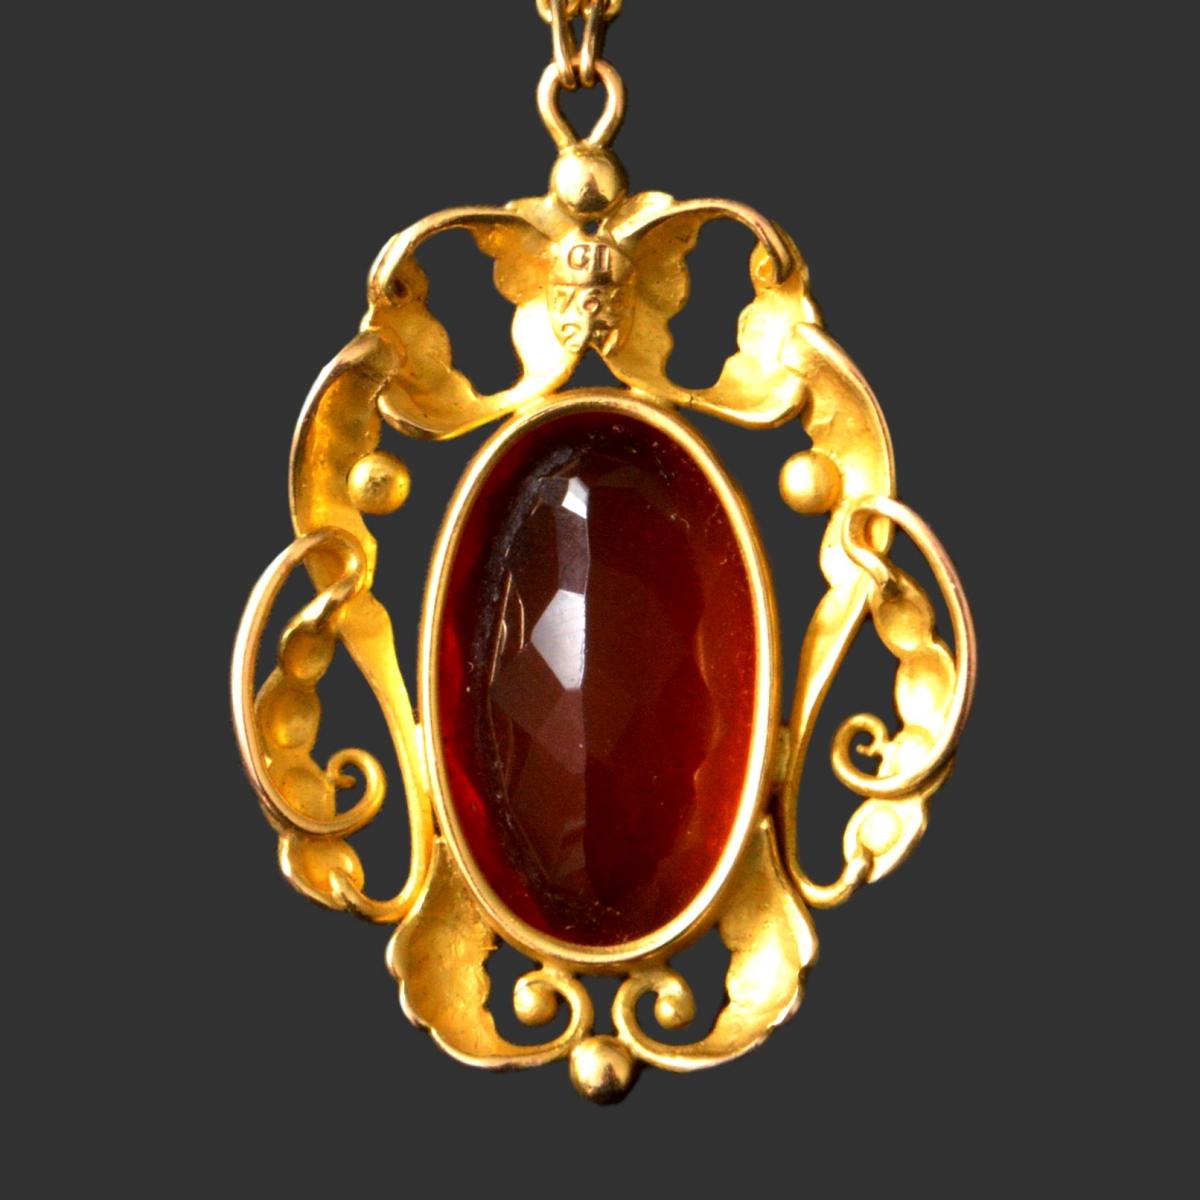 Georg Jensen gold and fire opal pendant